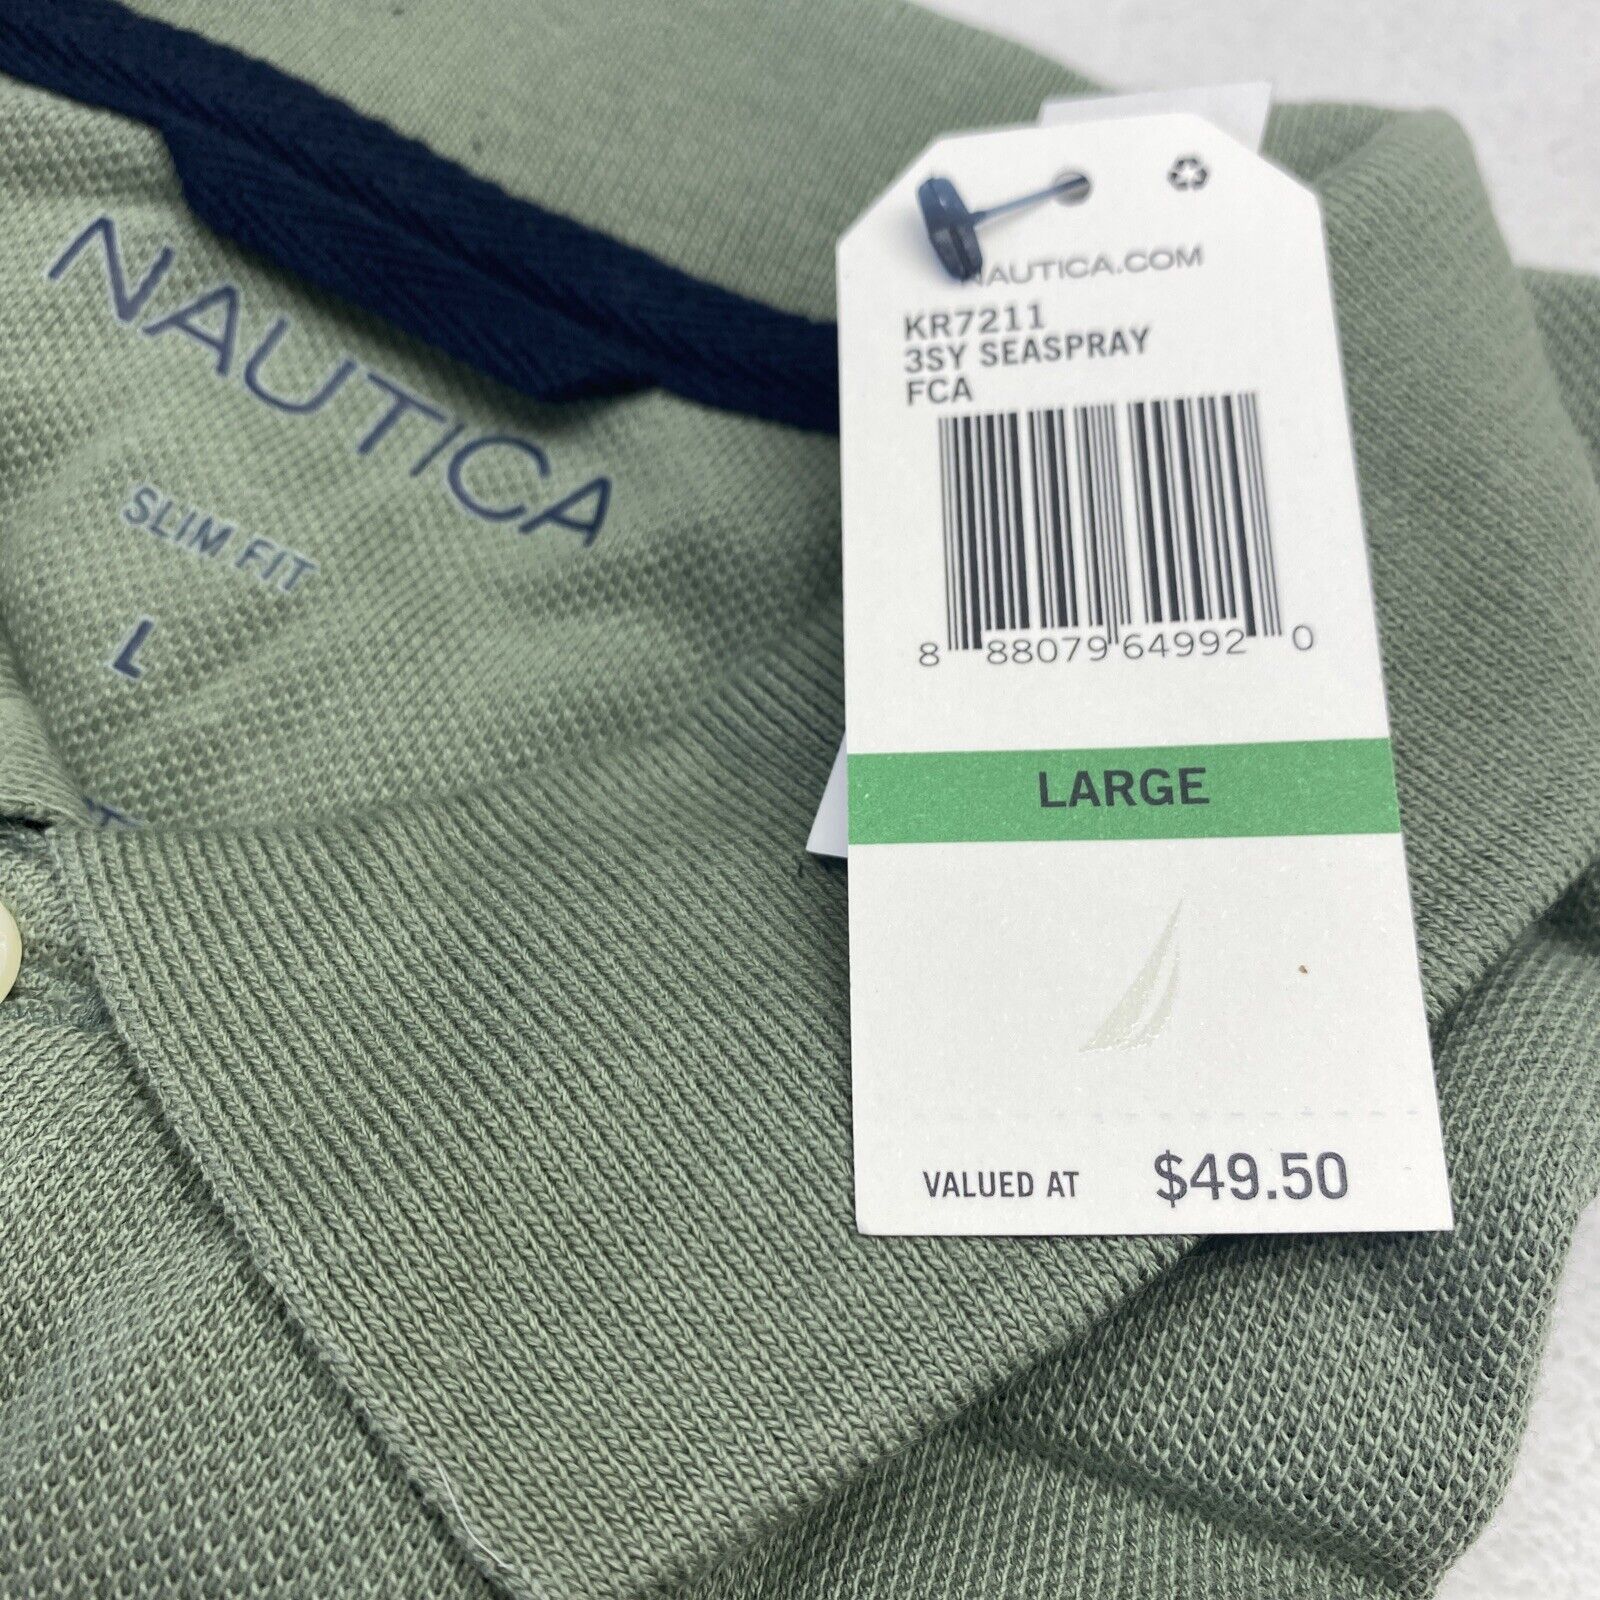 Nautica KR7211 Seaspray Short Sleeve Slim Fit Polo Shirt Mens Size Lar -  beyond exchange